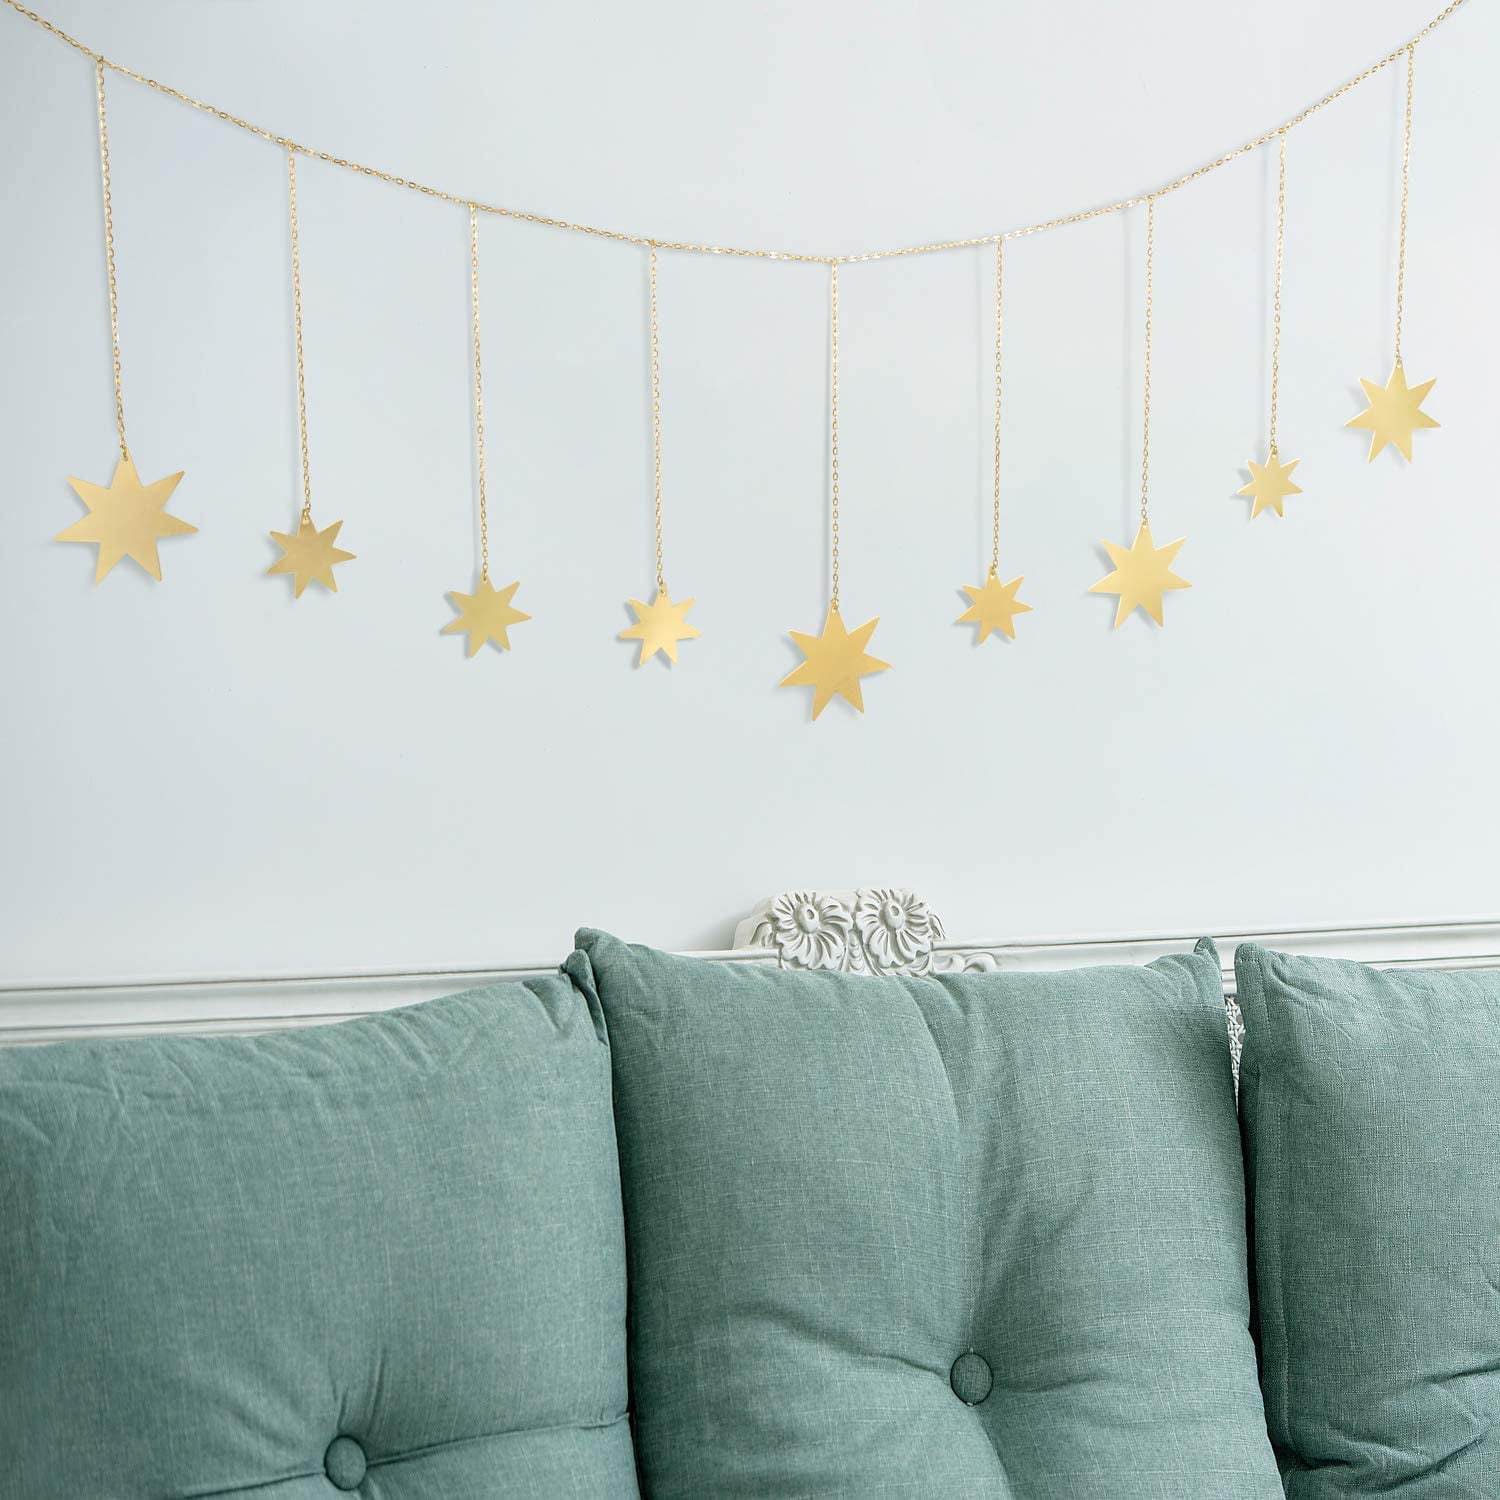 Mkono Star Garland Gold Glitter Star Metal Wall Hanging Decoration Christmas Ornaments Decor for Wedding Home Office Nursery Room Dorm